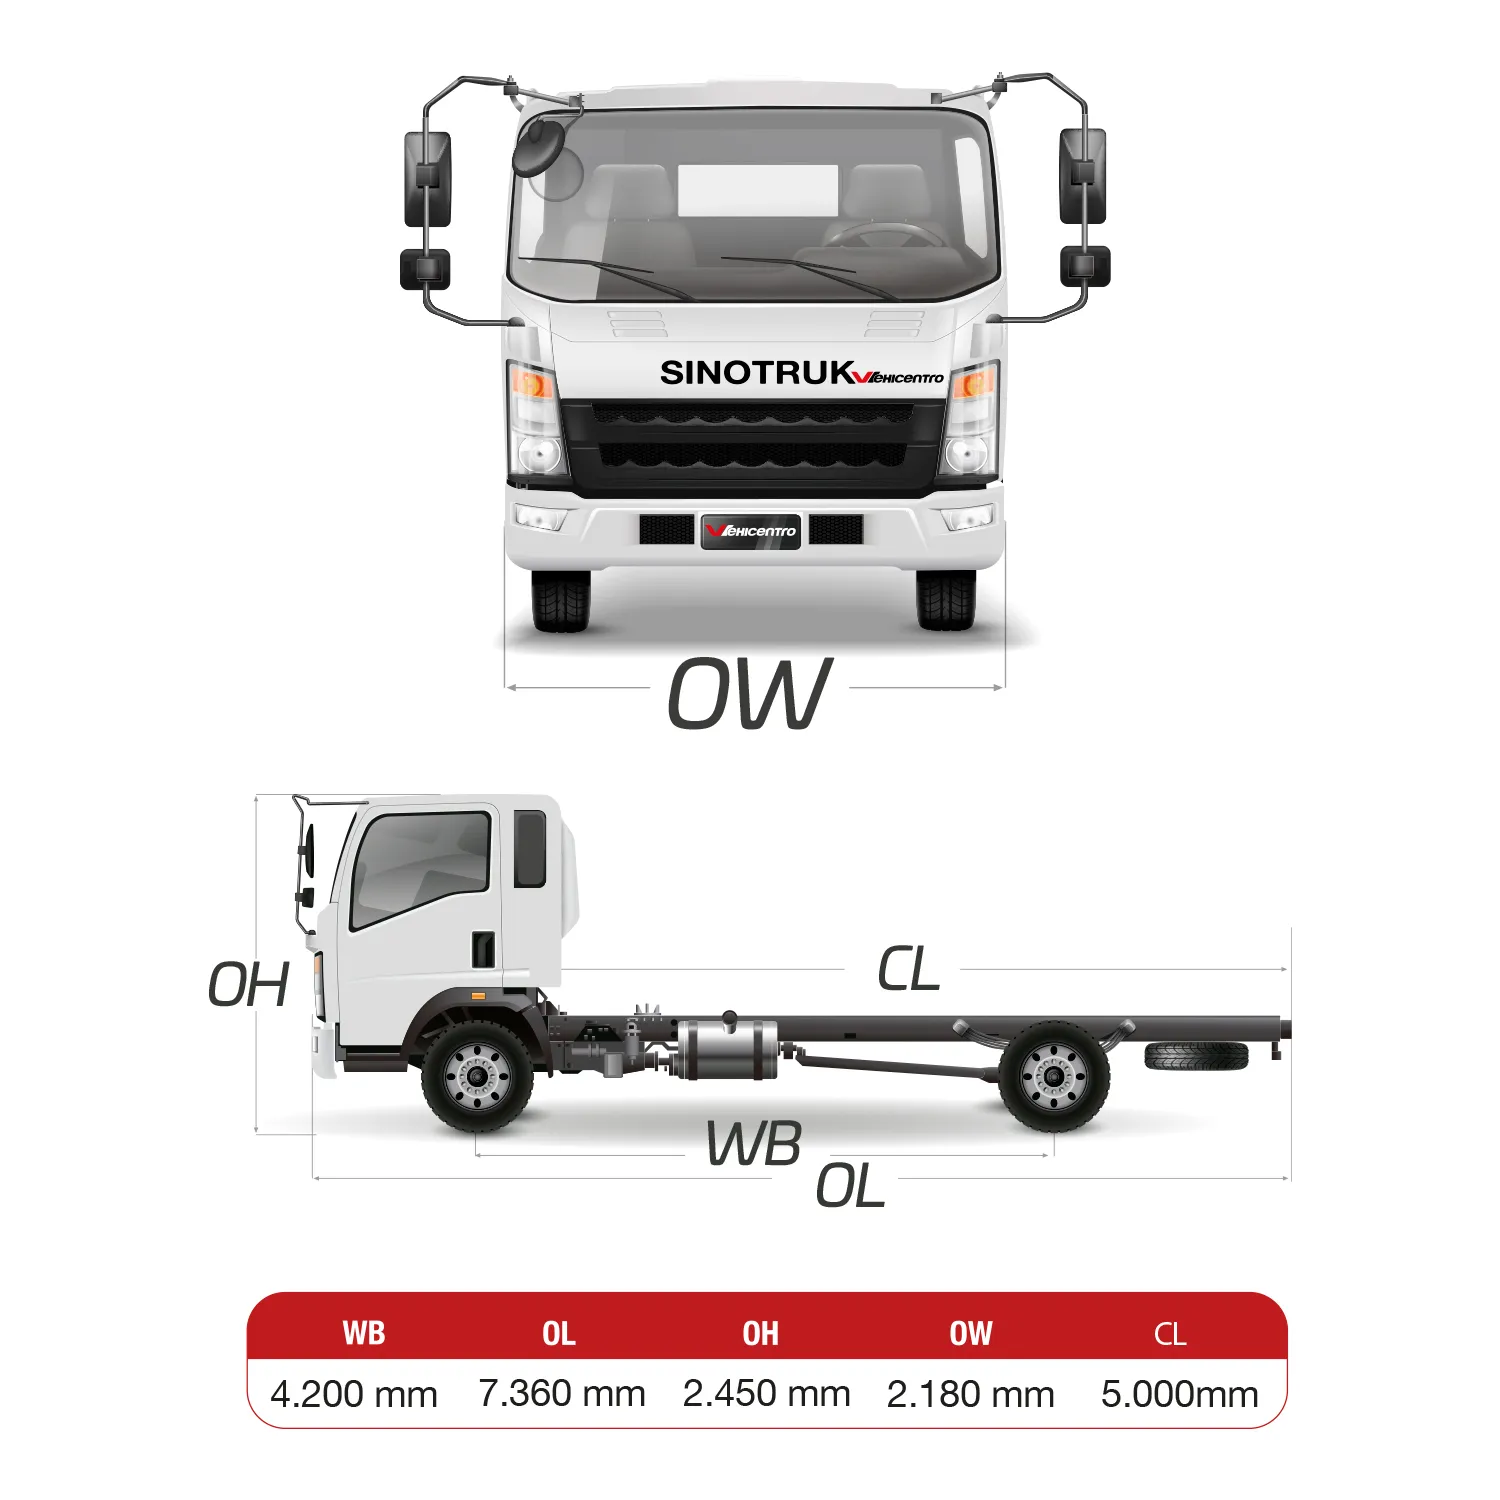 dimensiones-de-camion-de-6-toneladas-sinotruk-responsive